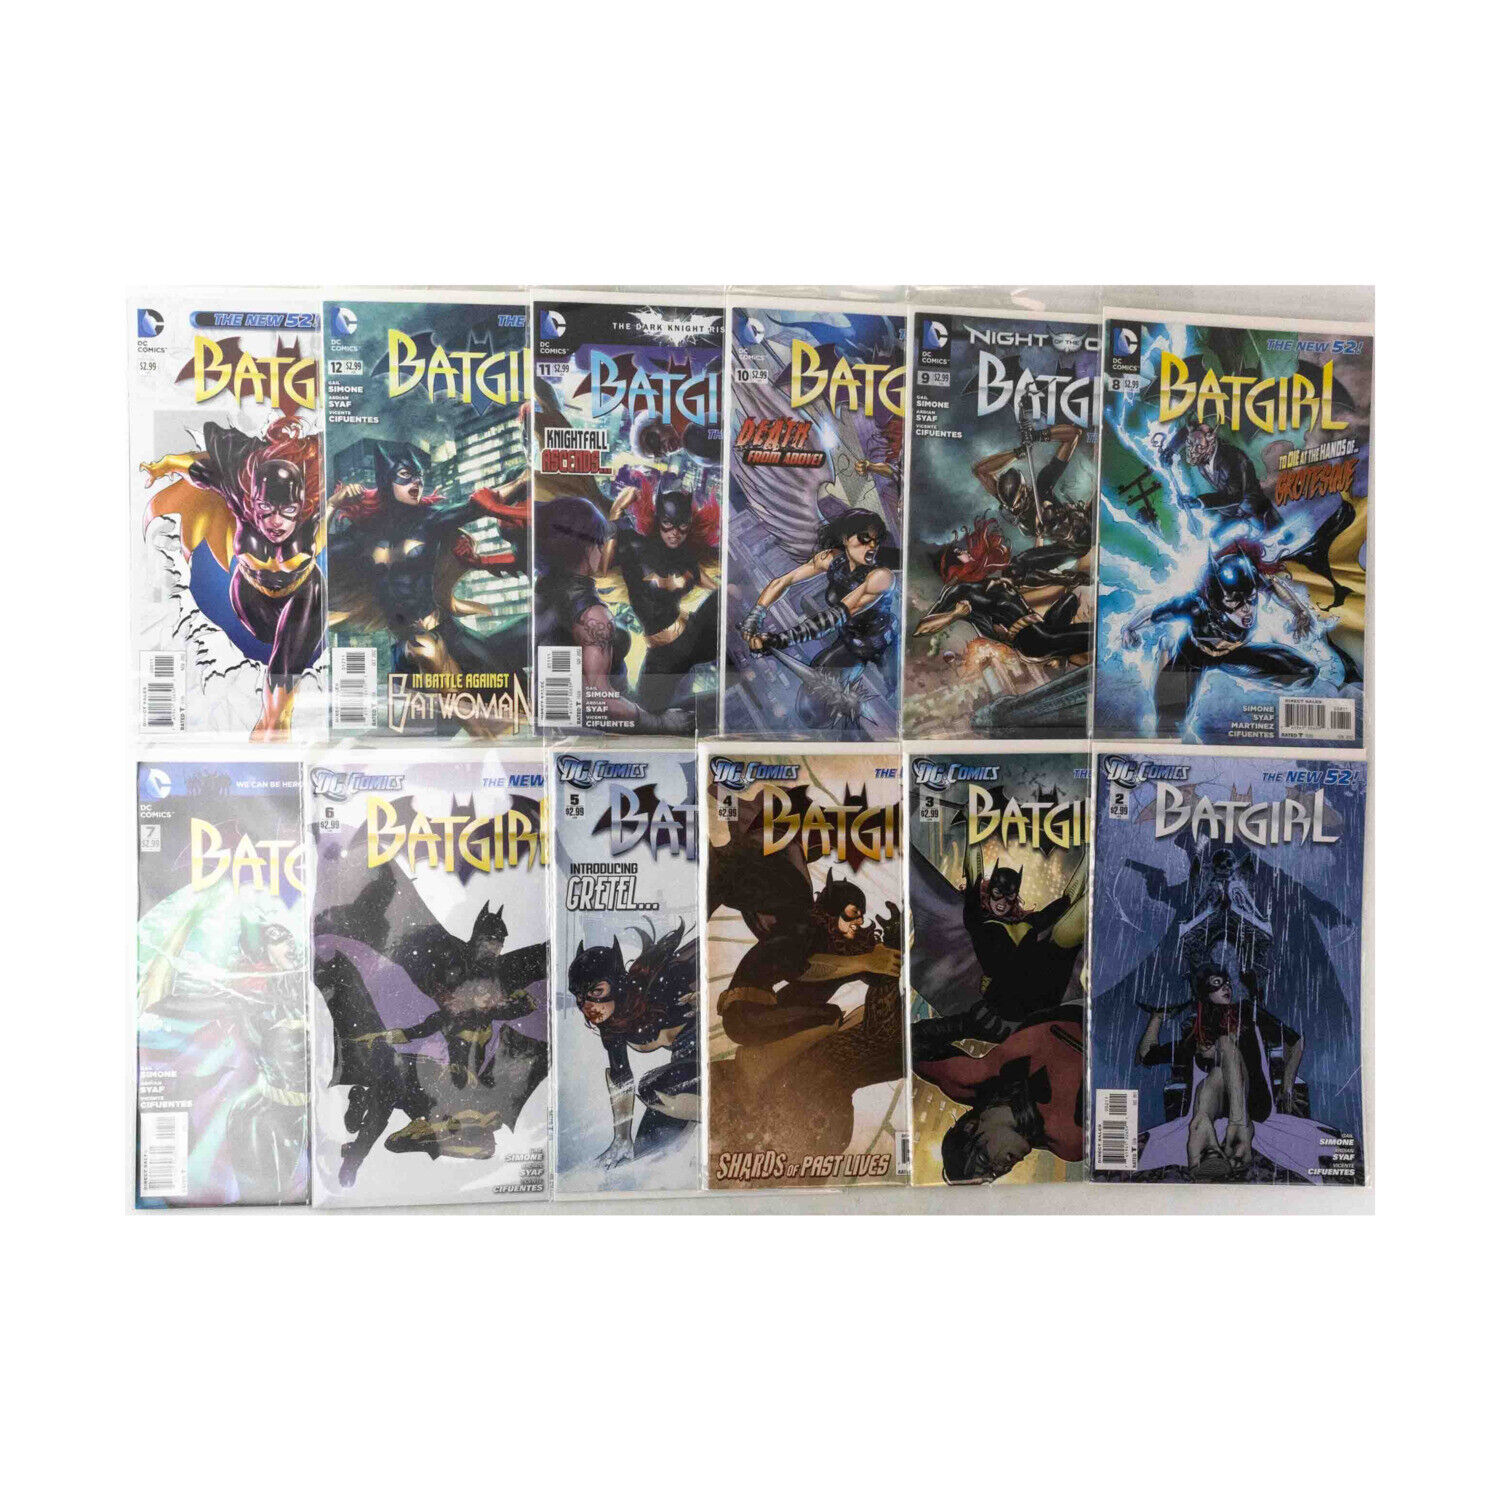 Vertigo Batgirl Batgirl 4th Series Collection - Issues #2-12 + #0 VG+